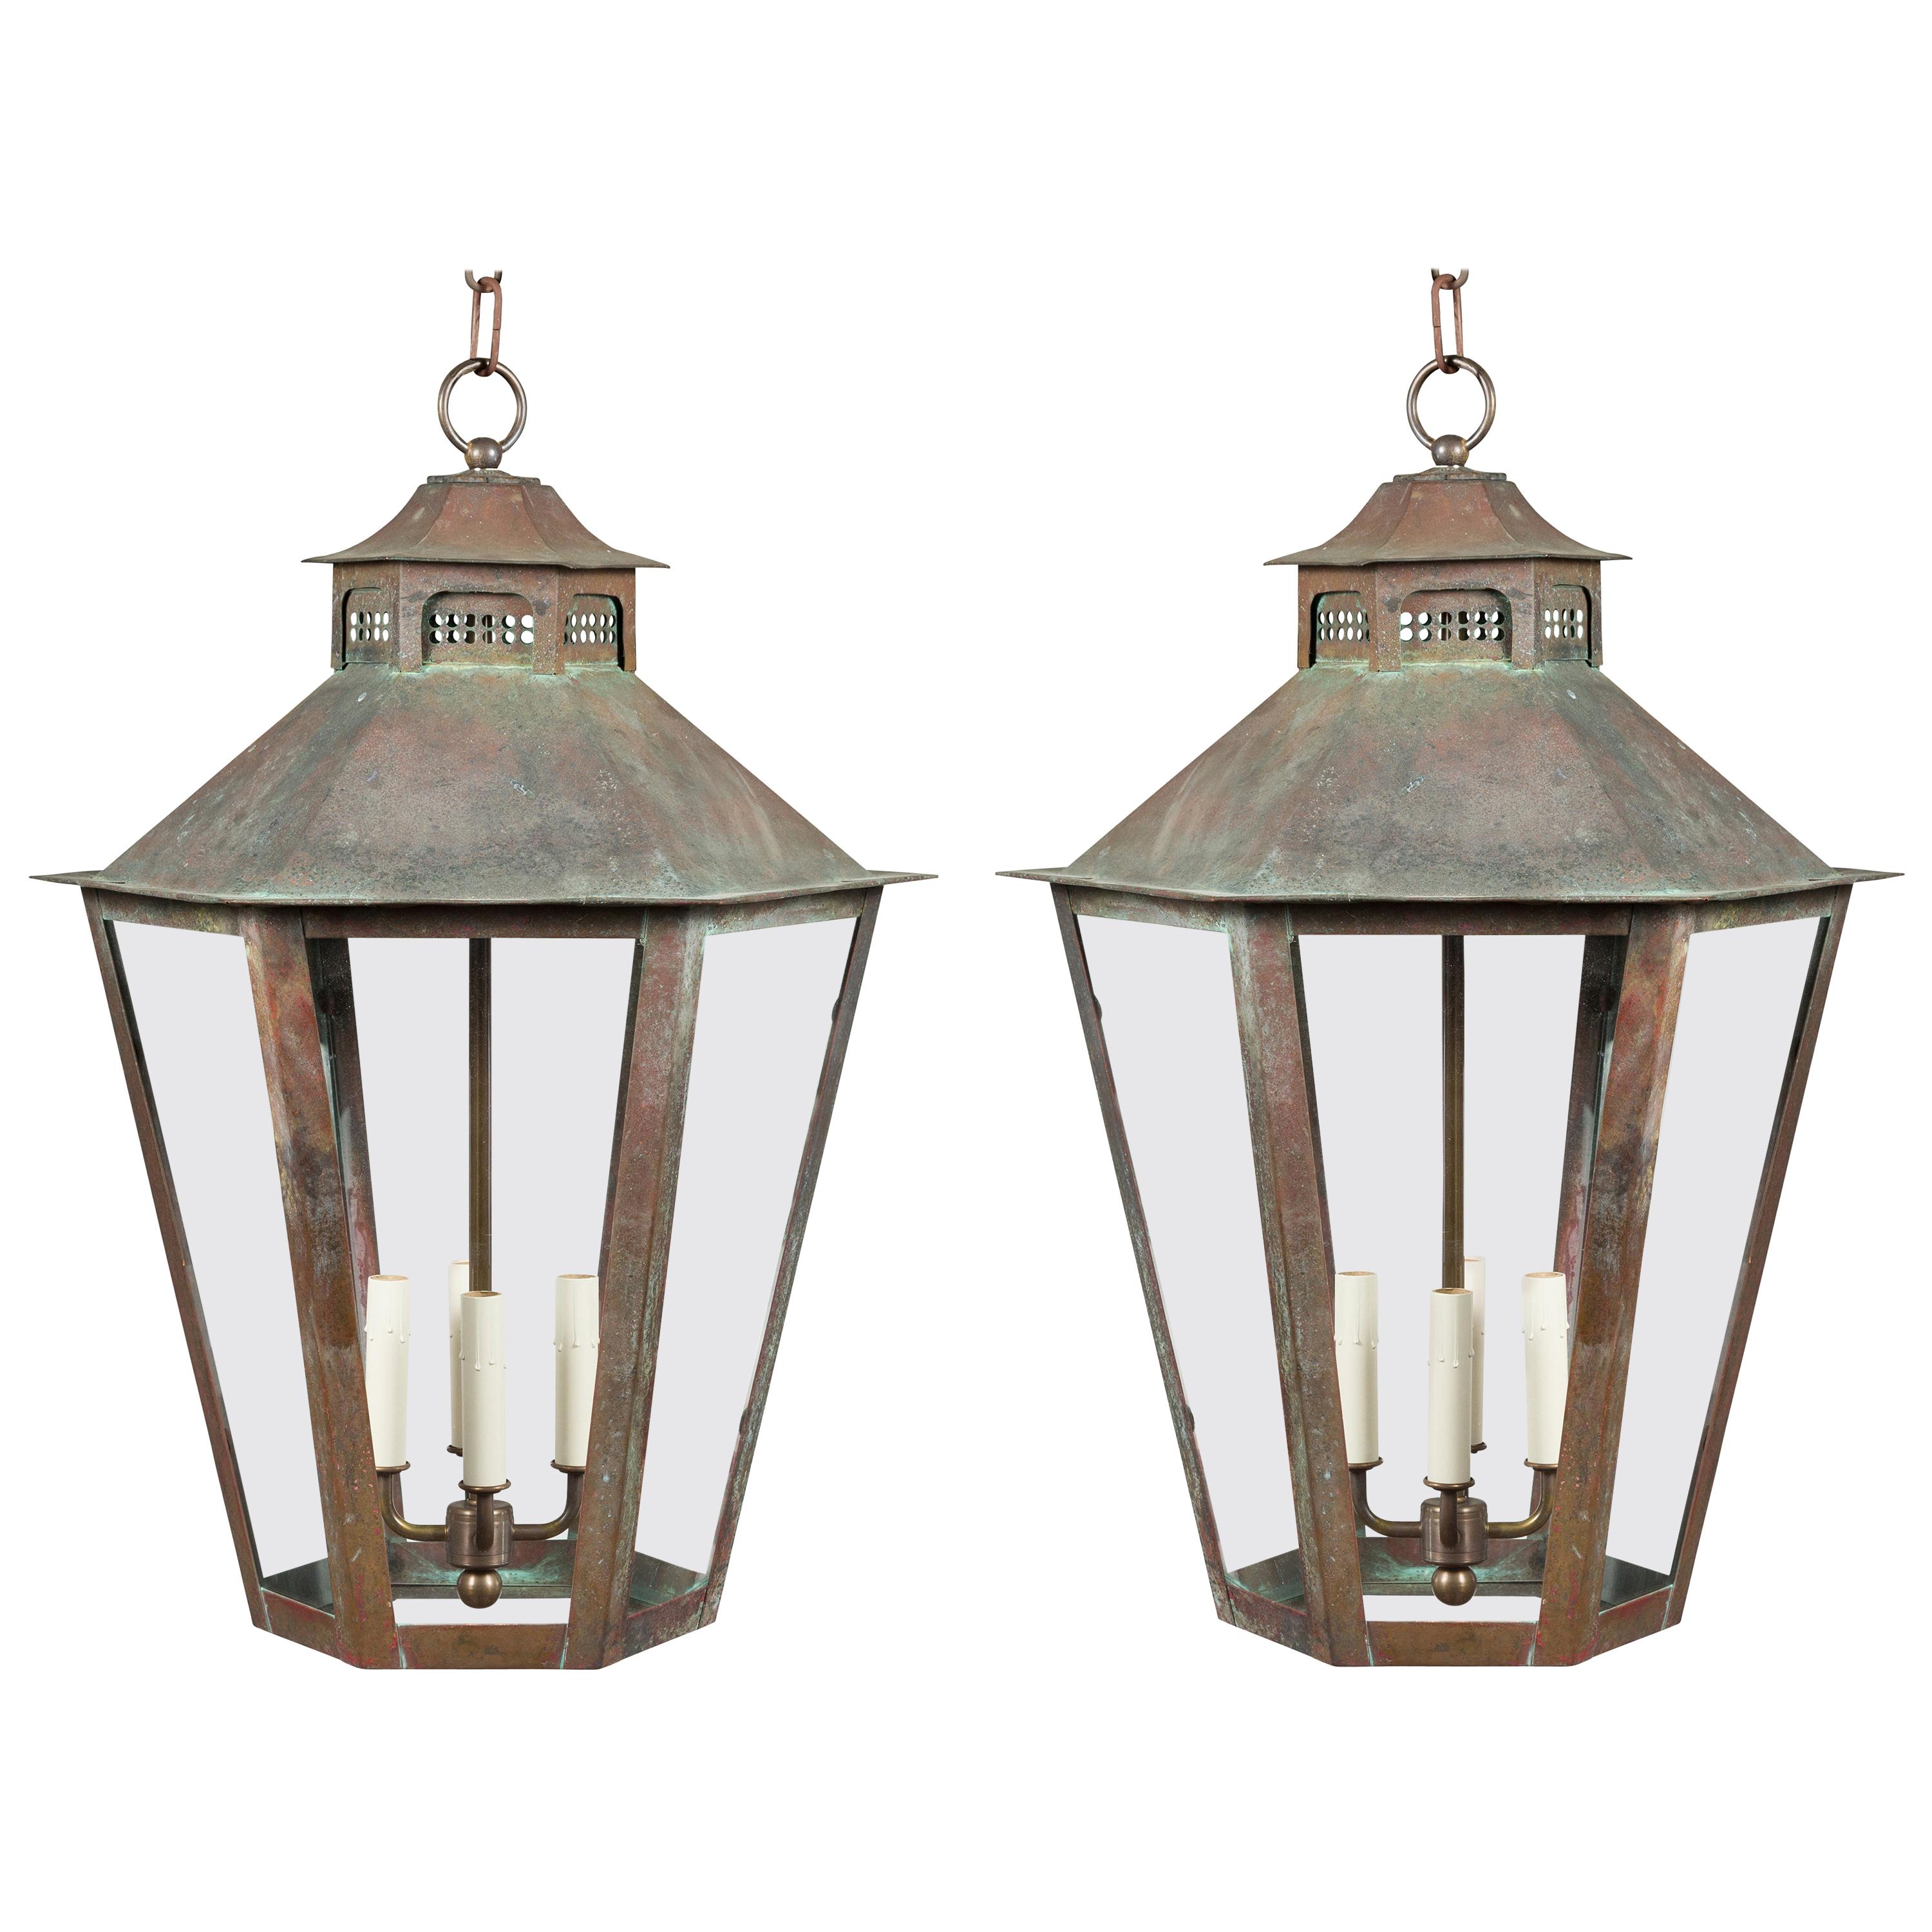 Pair of 1900s English Turn of the Century Four-Light Hexagonal Copper Lanterns